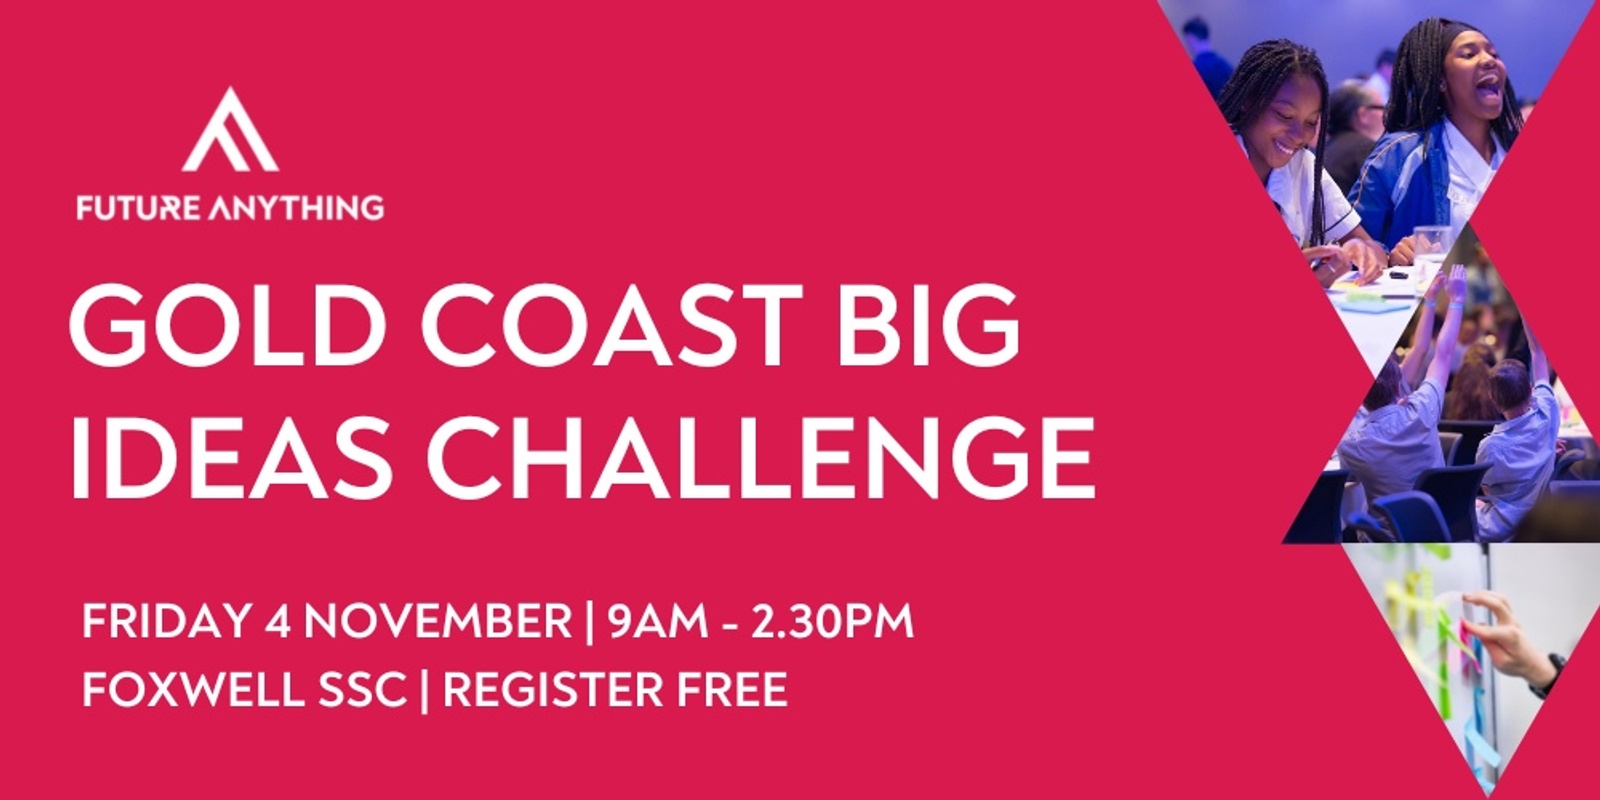 Banner image for Gold Coast Big Ideas Challenge 2022